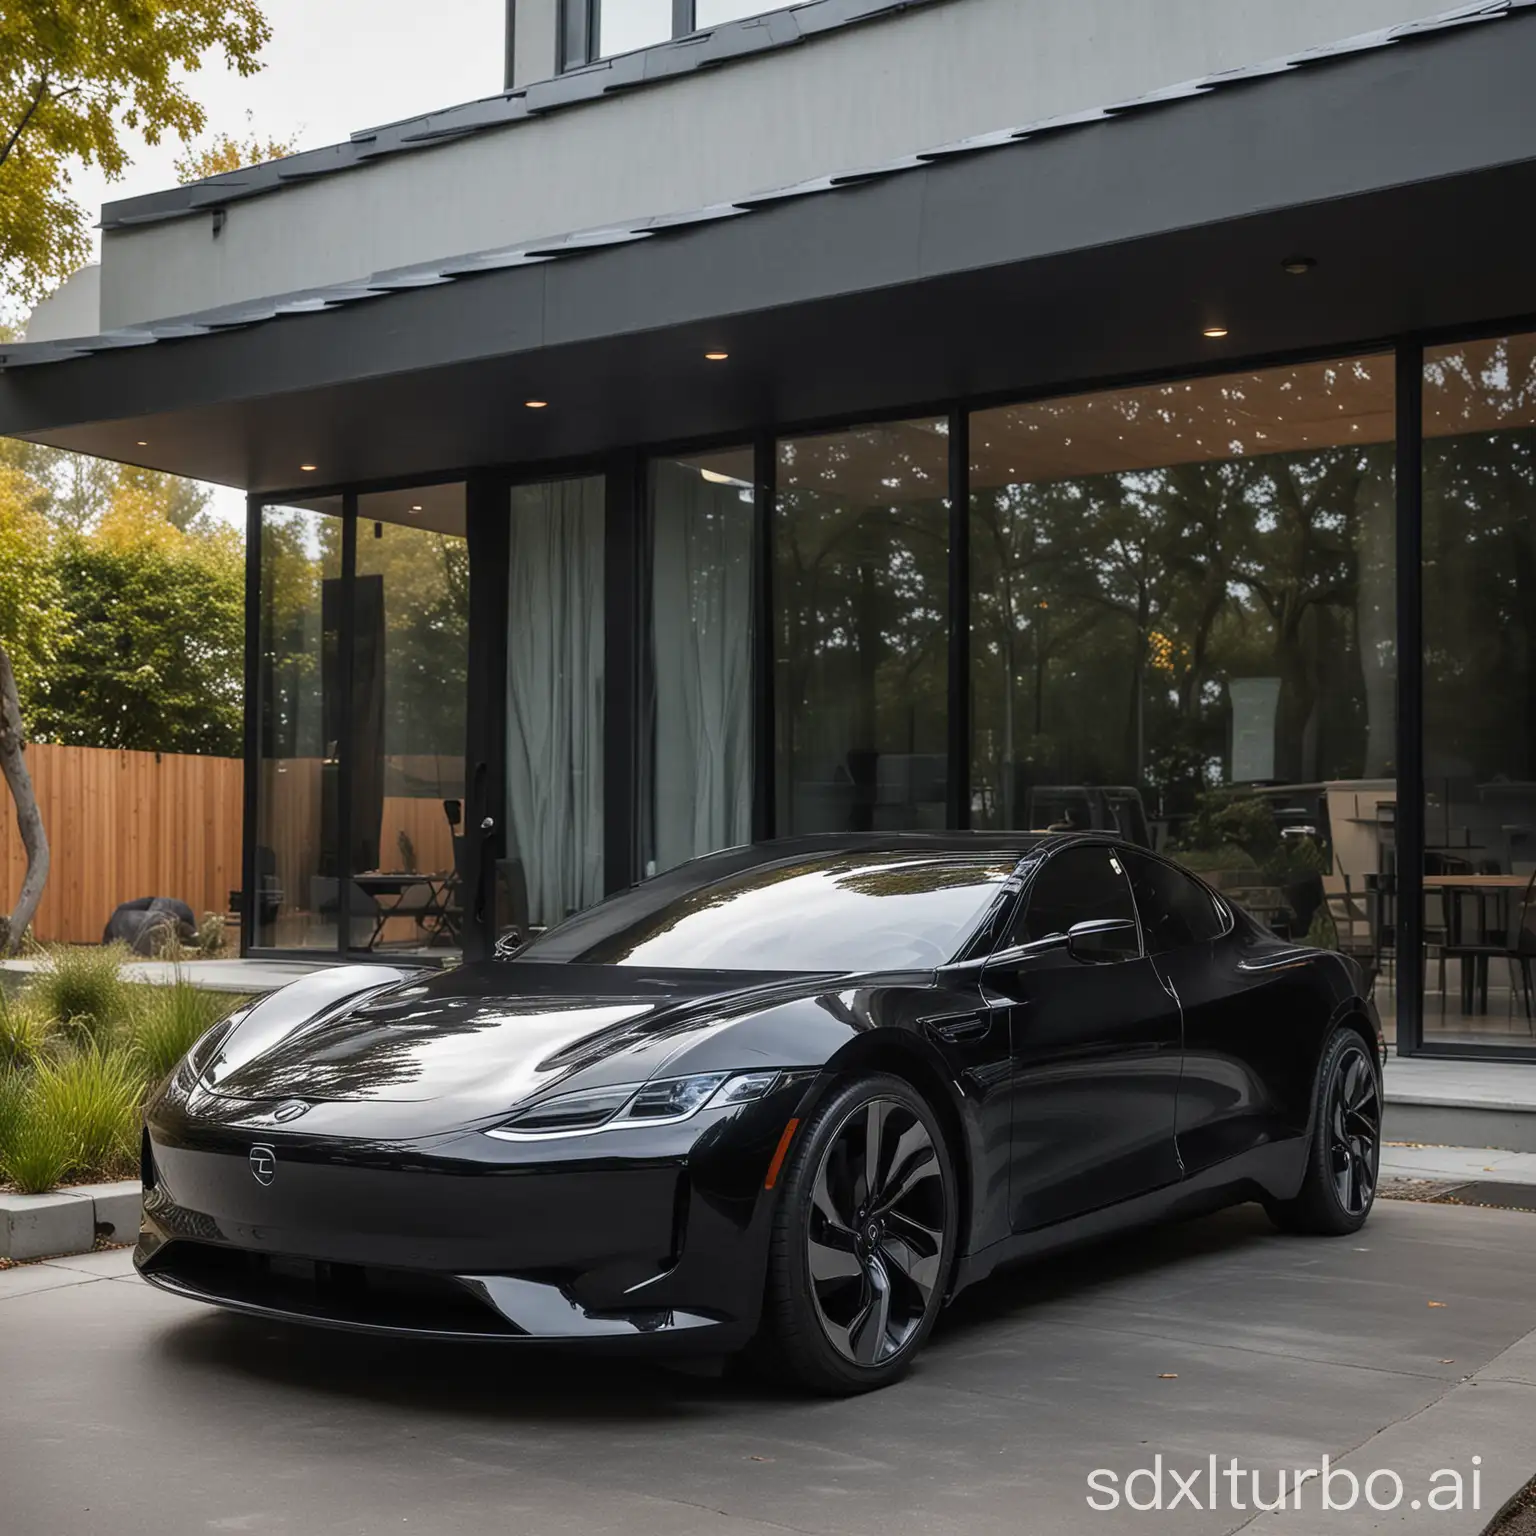 Modern-Home-with-Sleek-Black-Electric-Car